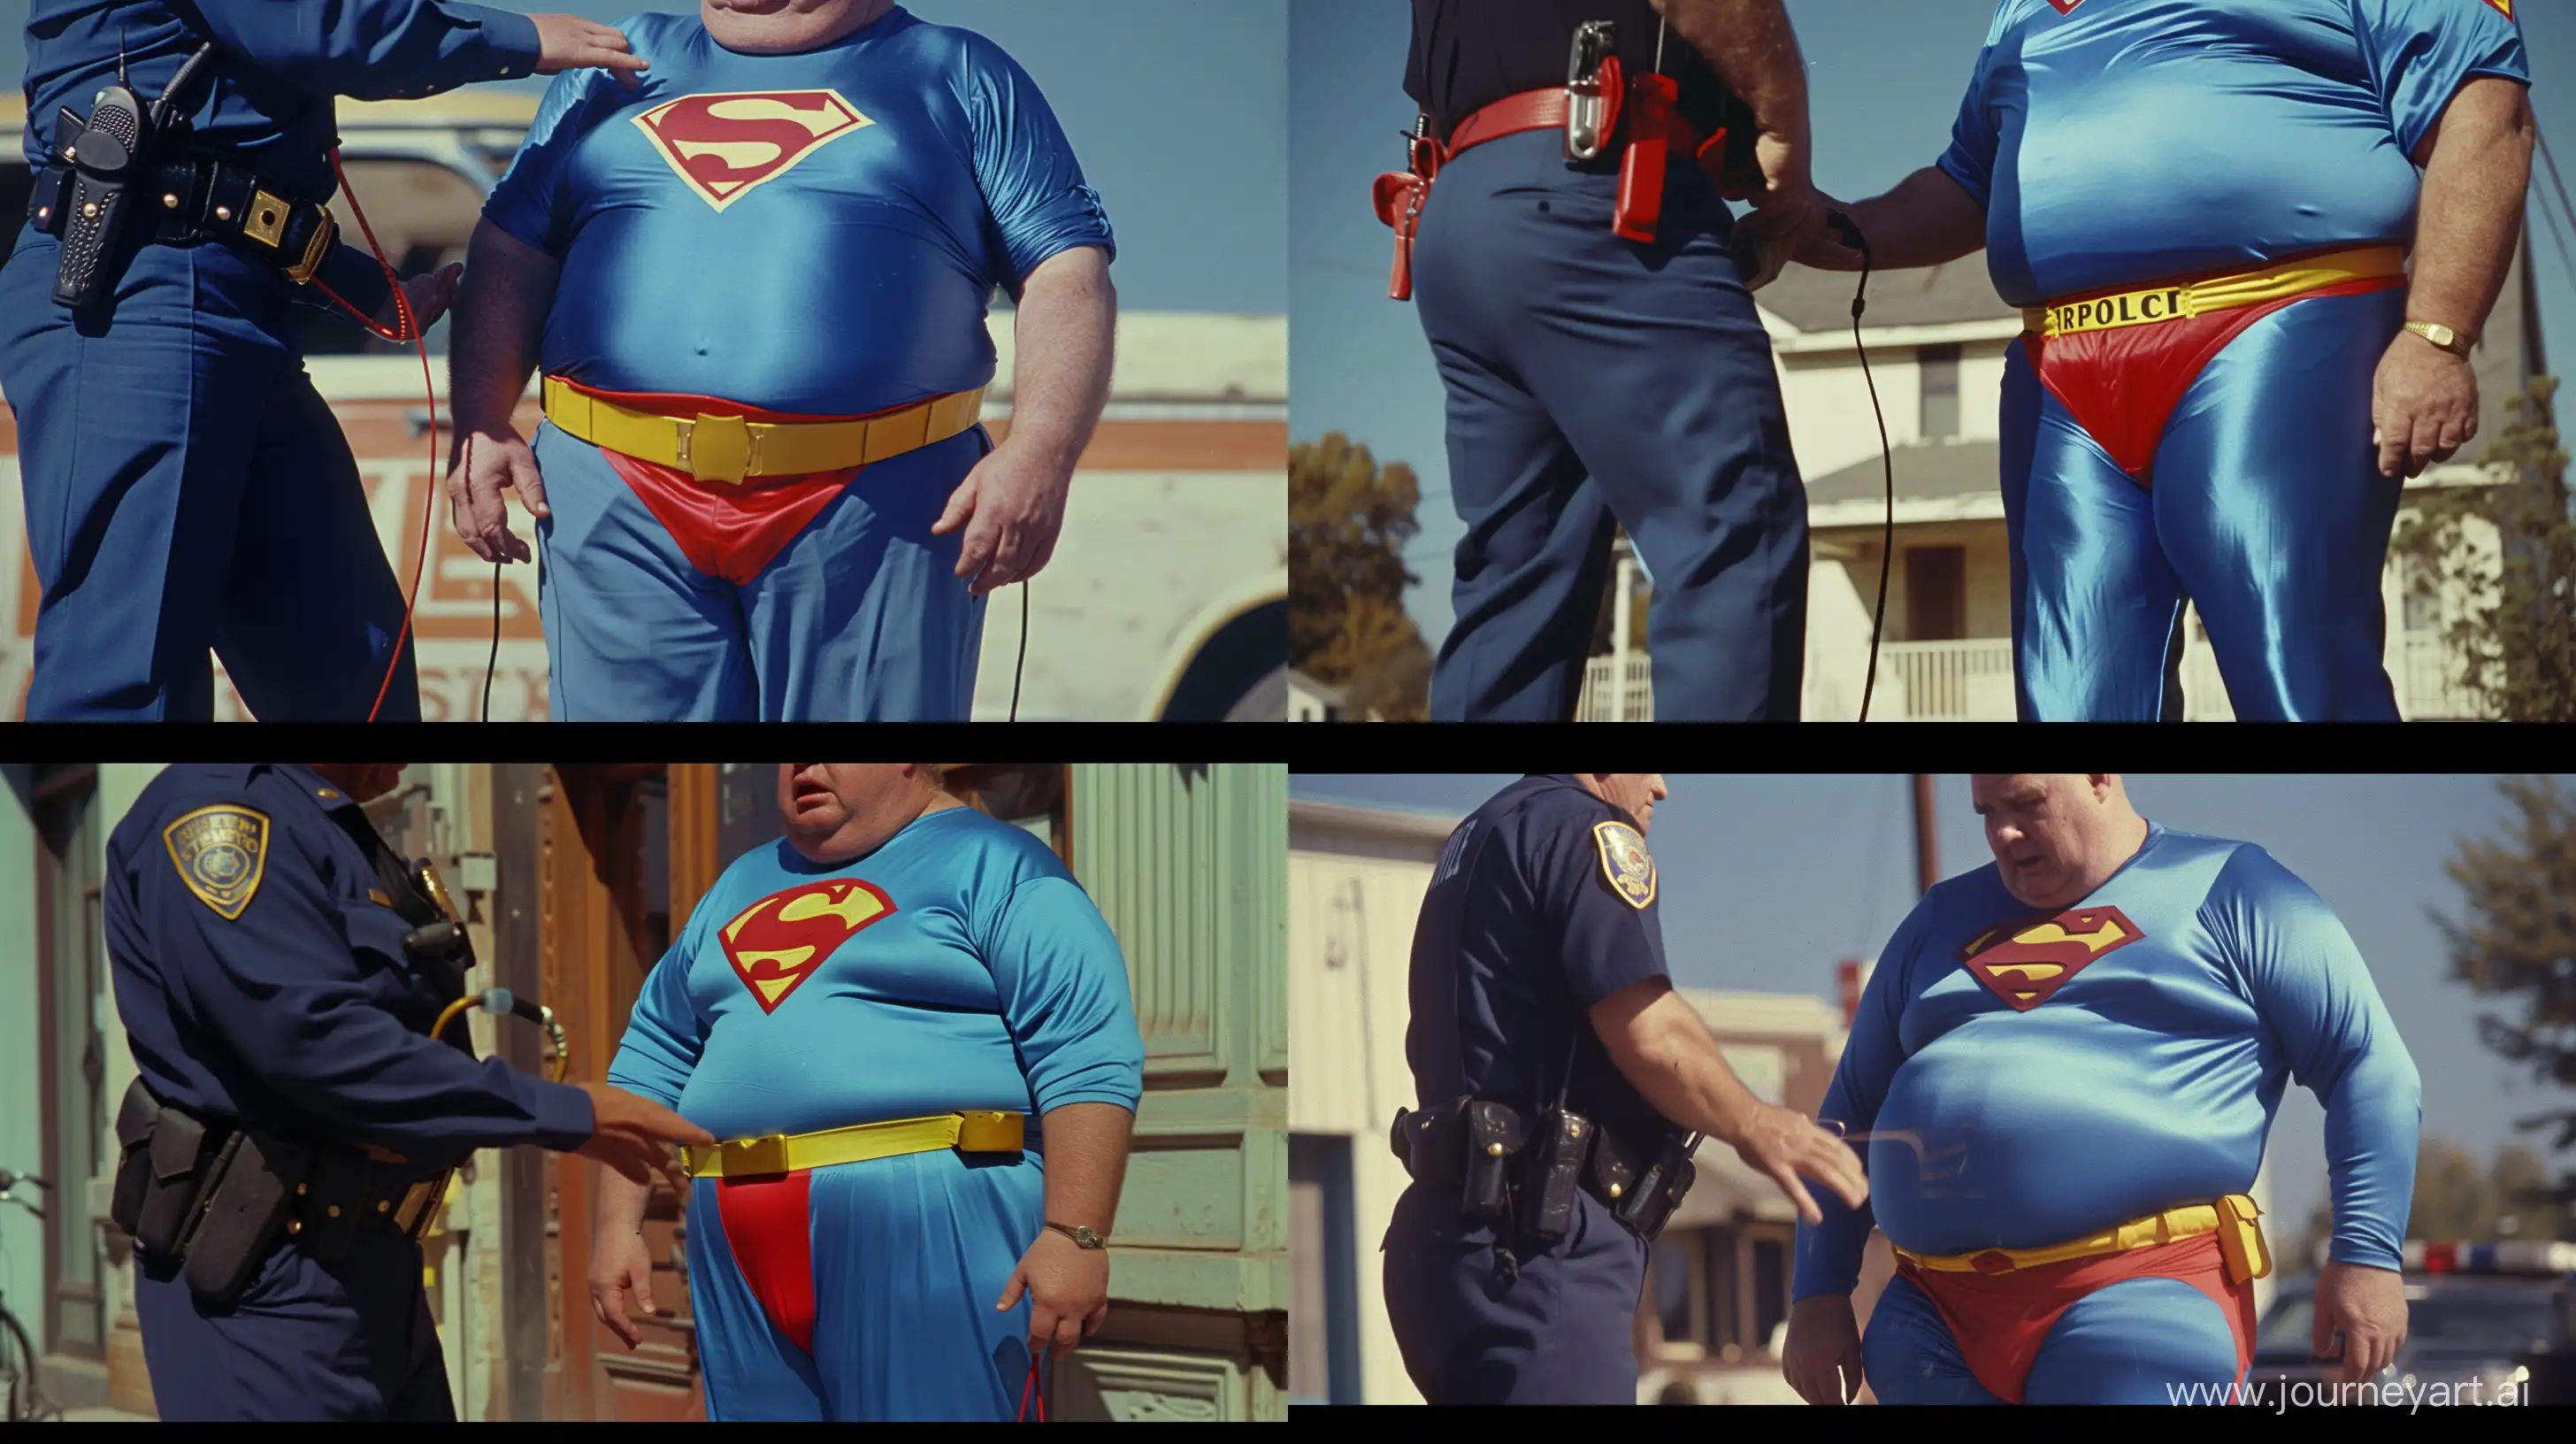 Epic-Showdown-Silk-Police-Officer-vs-1978-Superman-Costume-Clash